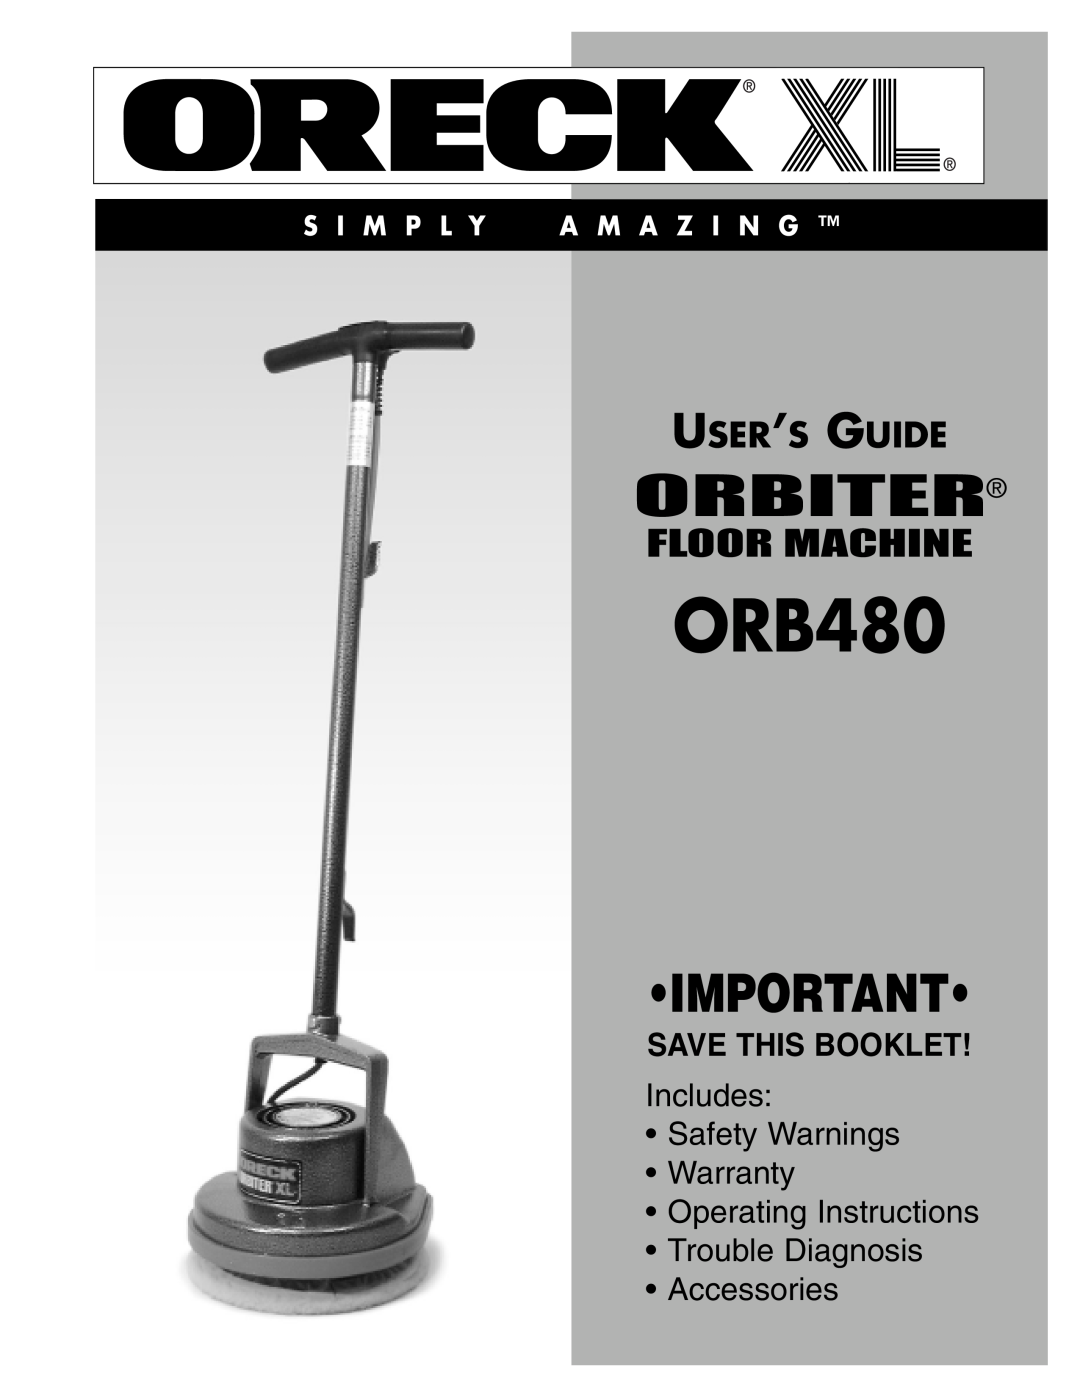 Oreck ORB480 warranty S I M P L Y A M A Z I N G, Floor Machine, Orbiteruser’S Guide, Save This Booklet, Accessories 